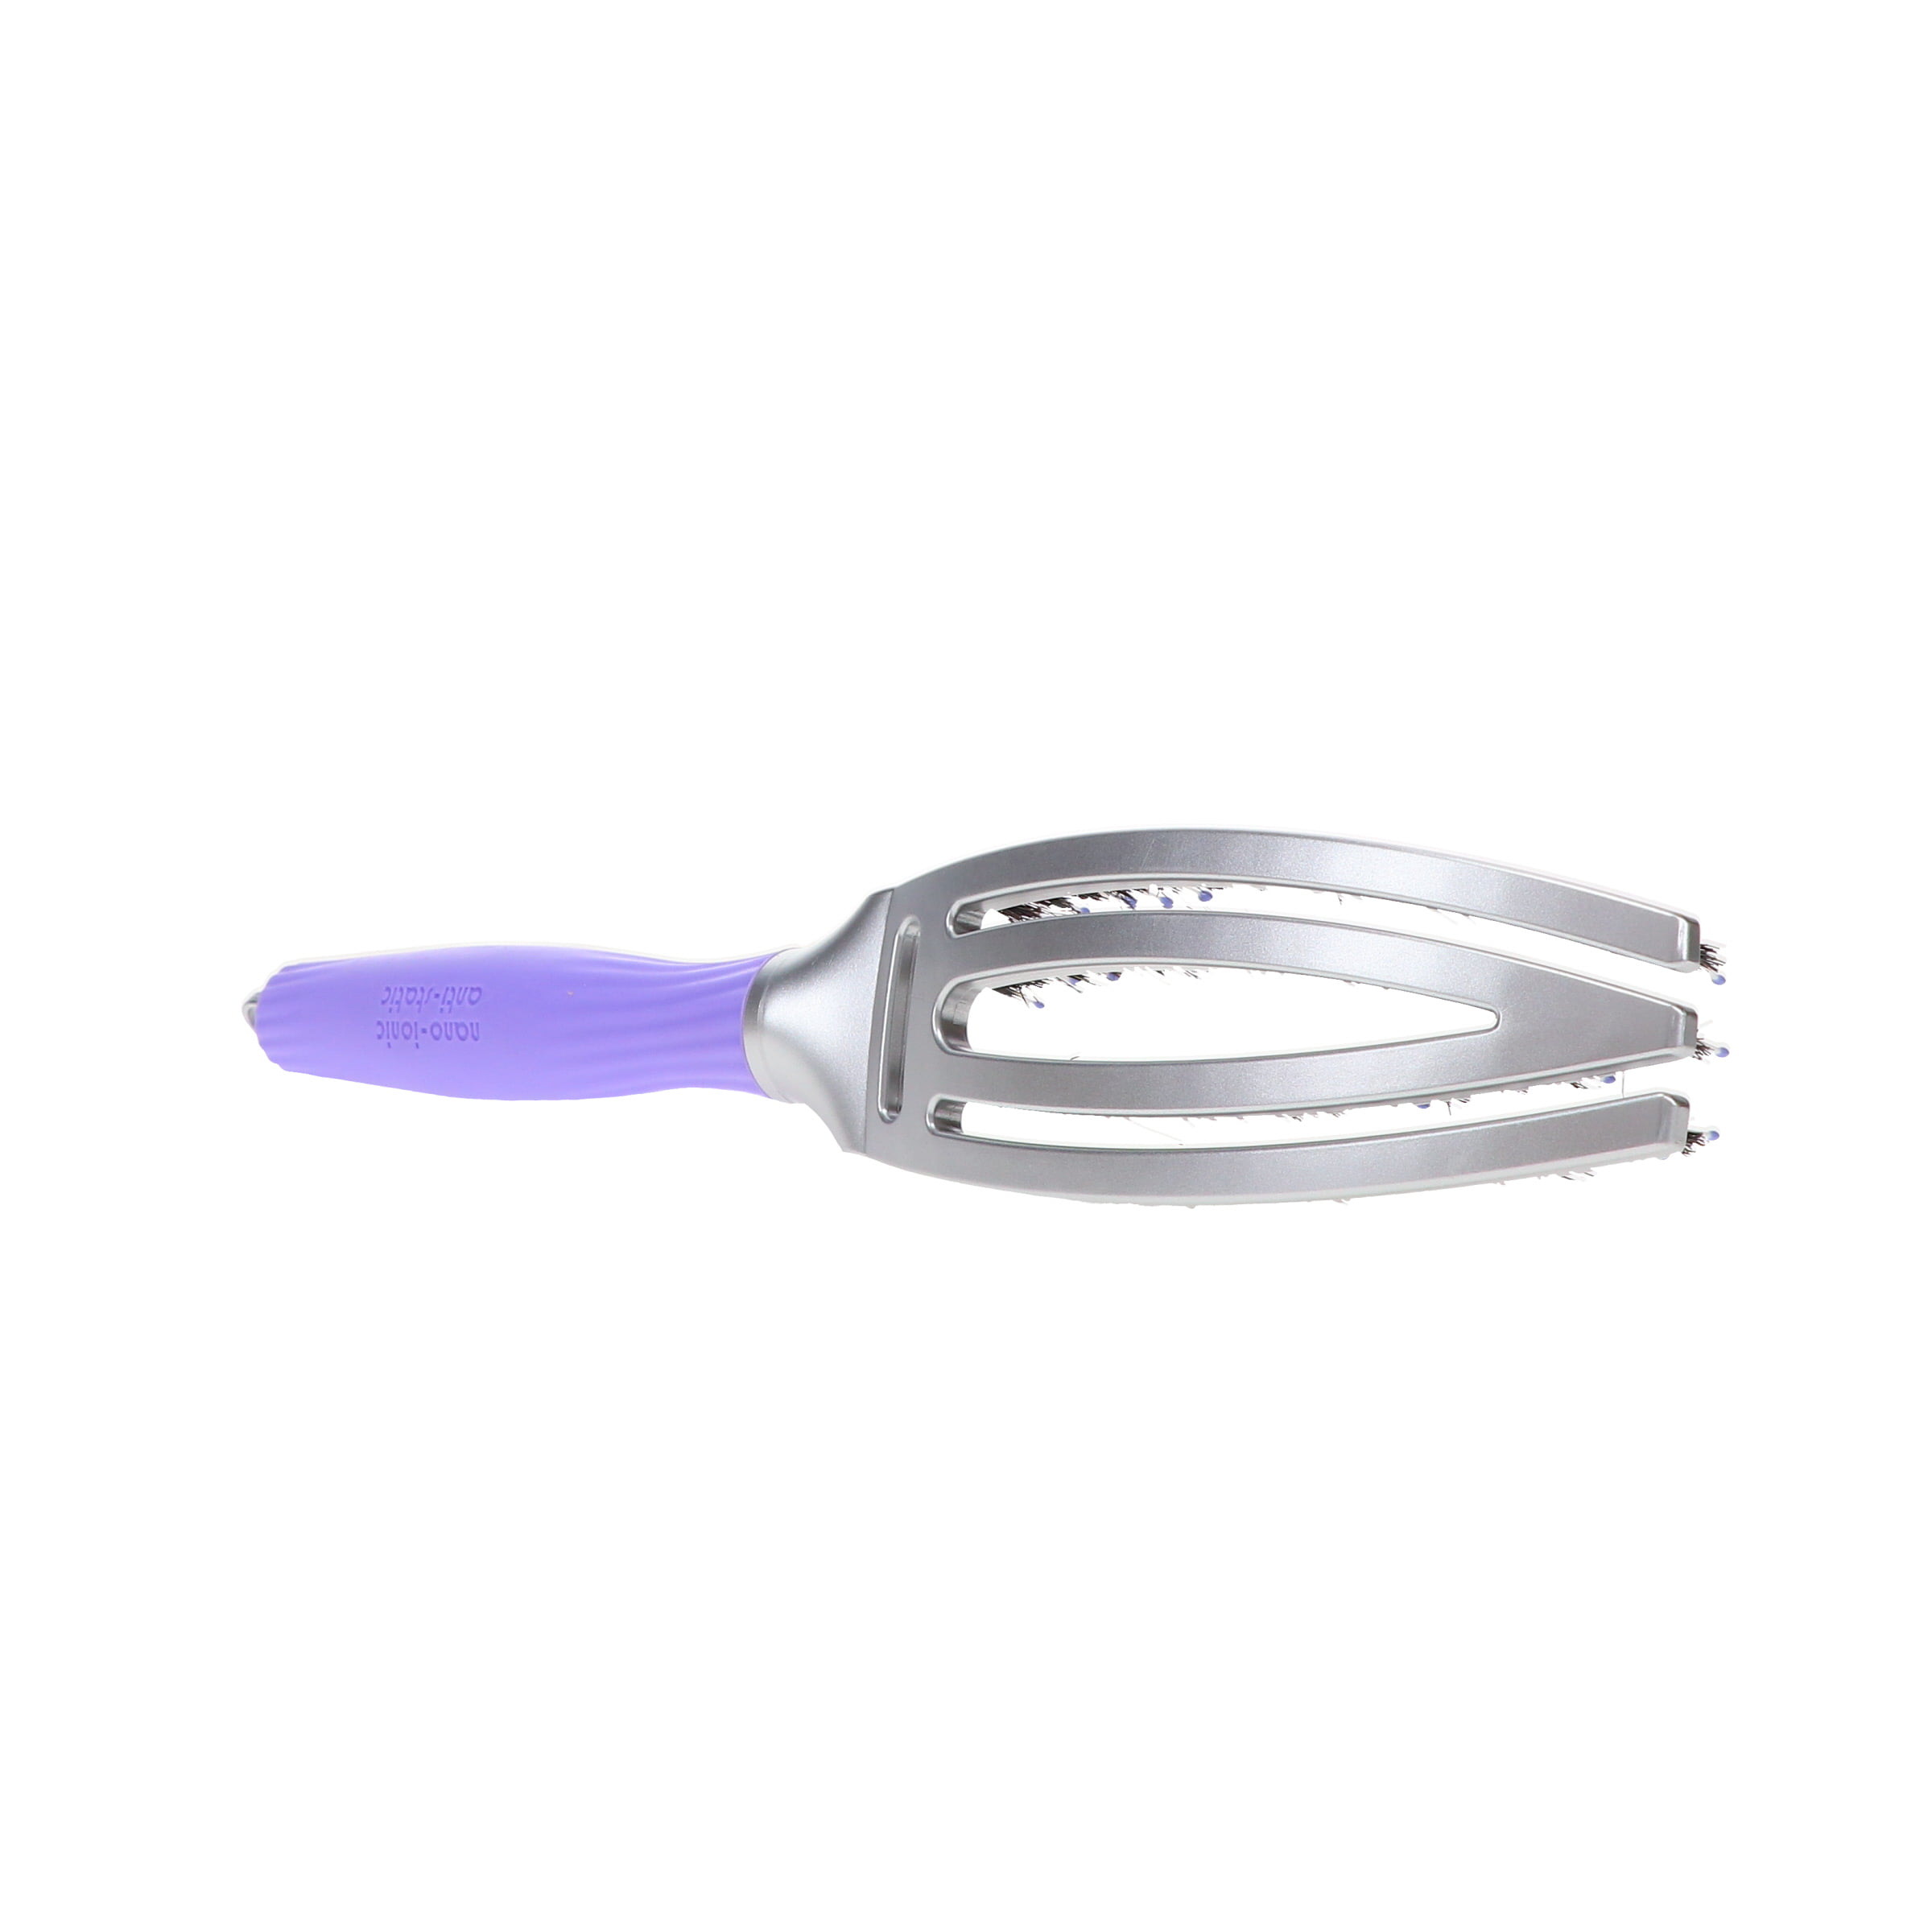 Olivia Garden Fingerbrush Curved & Vented Paddle Brush Petite